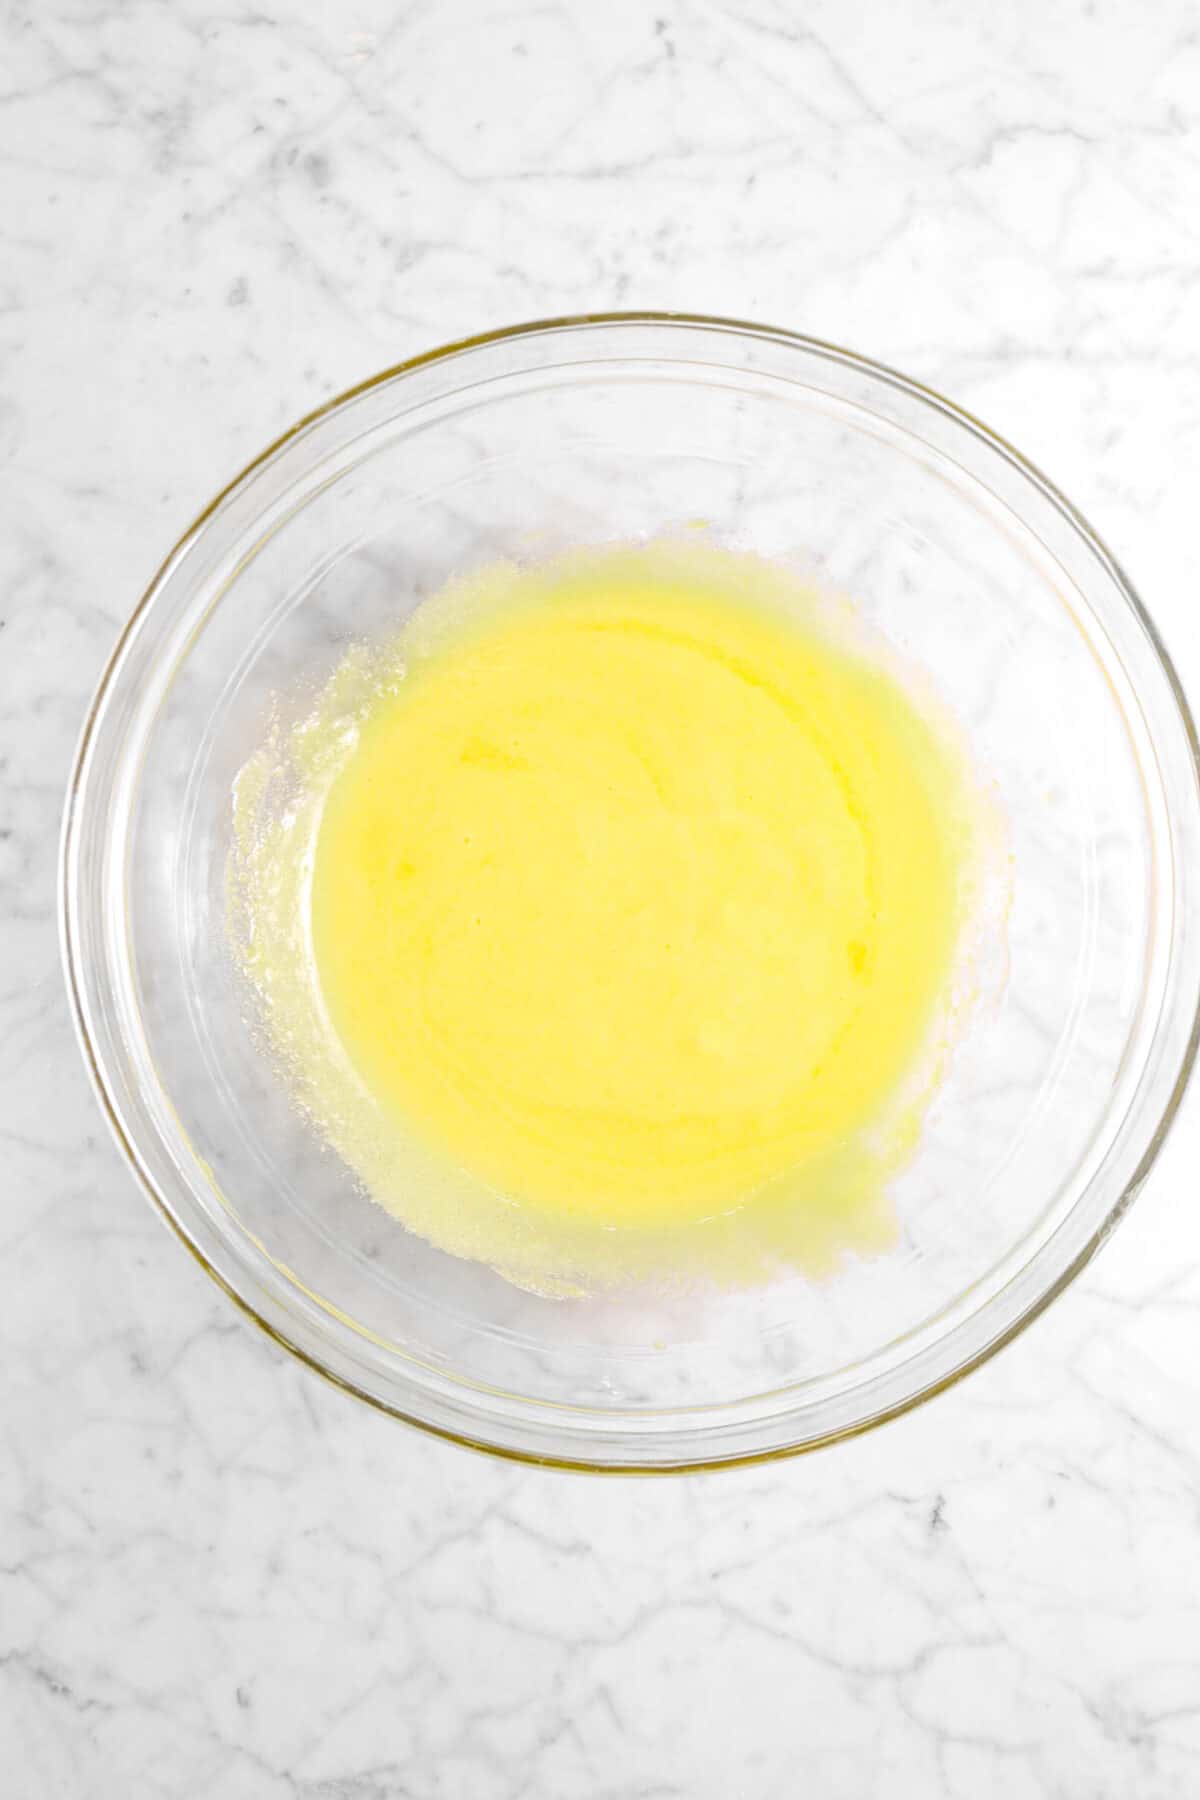 egg yolks and sugar mixed together